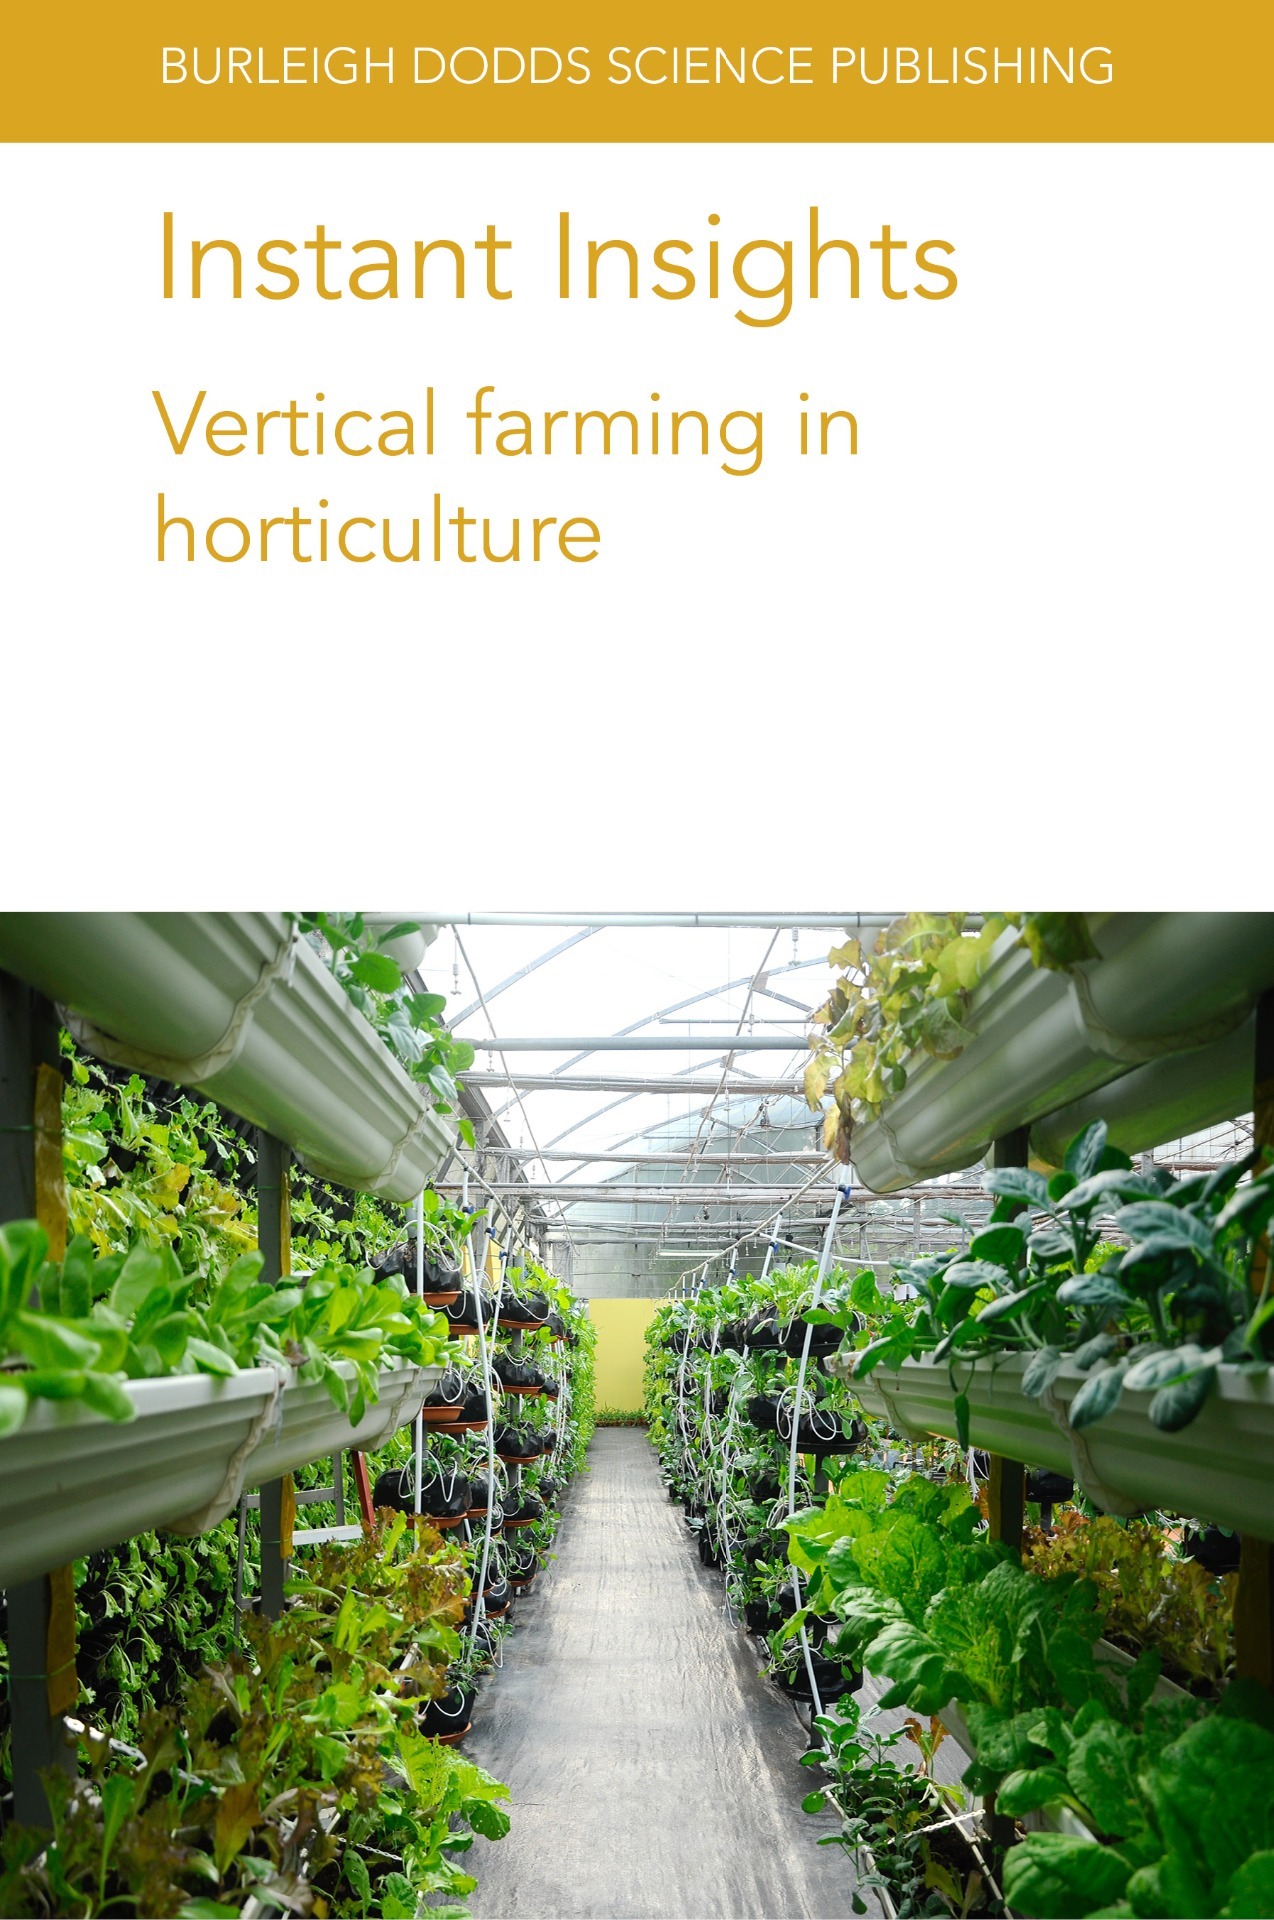 Vertical farming in horticulture